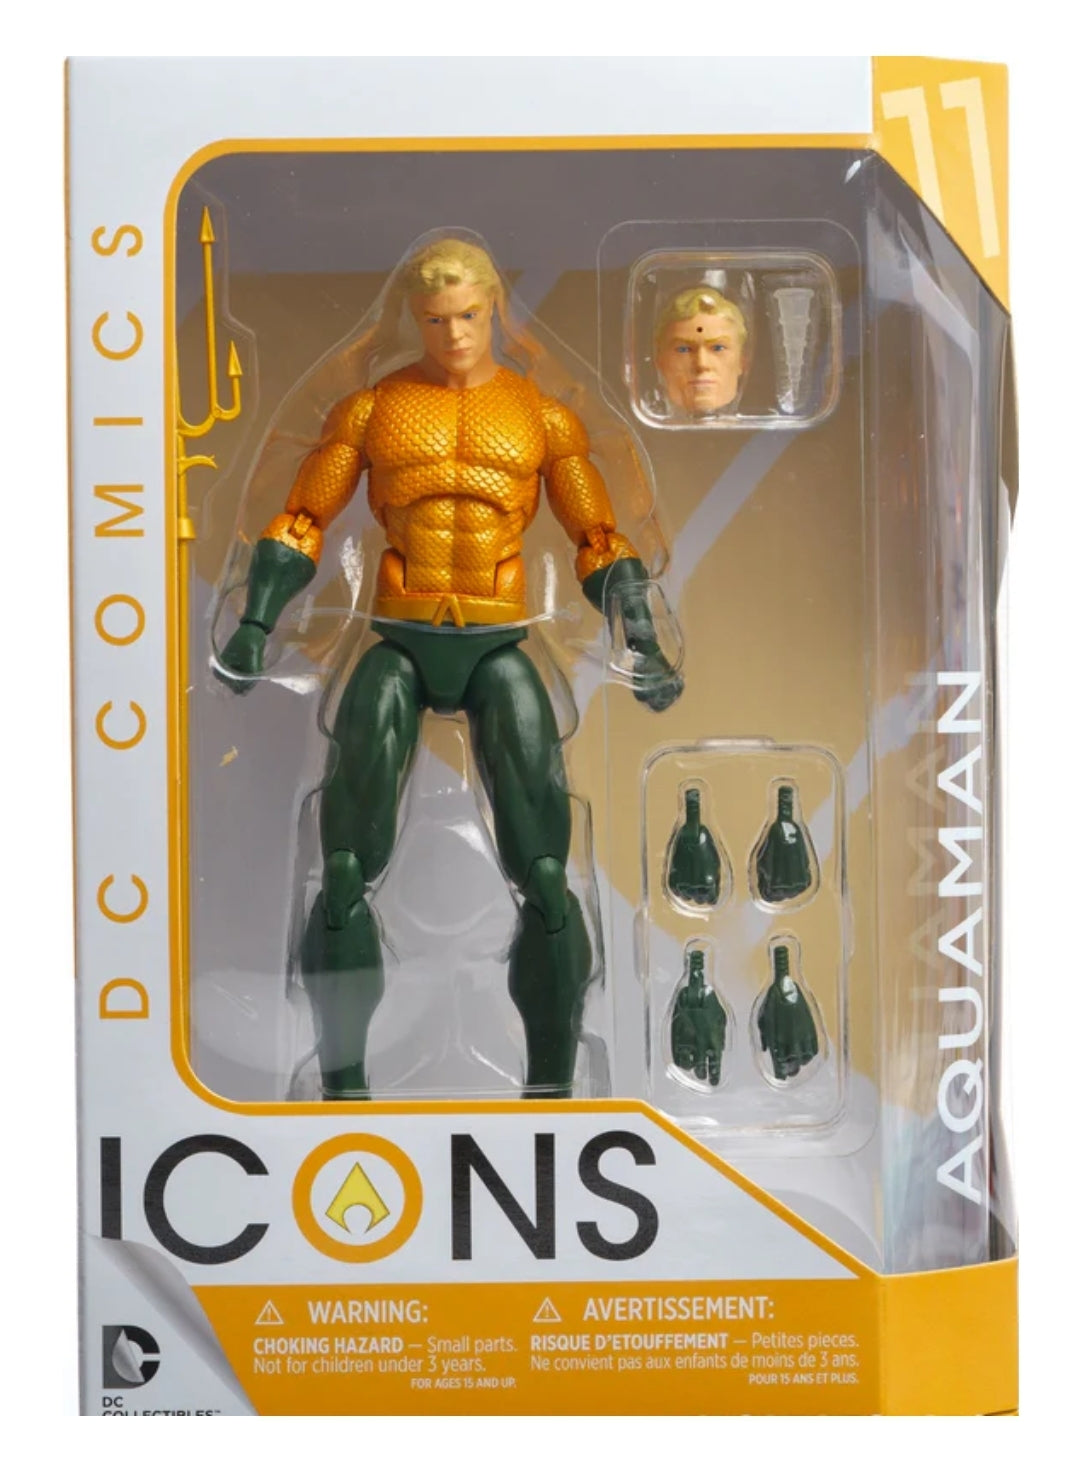 NIB *DC Icons Series "Aquaman" Legend Action Figure #11